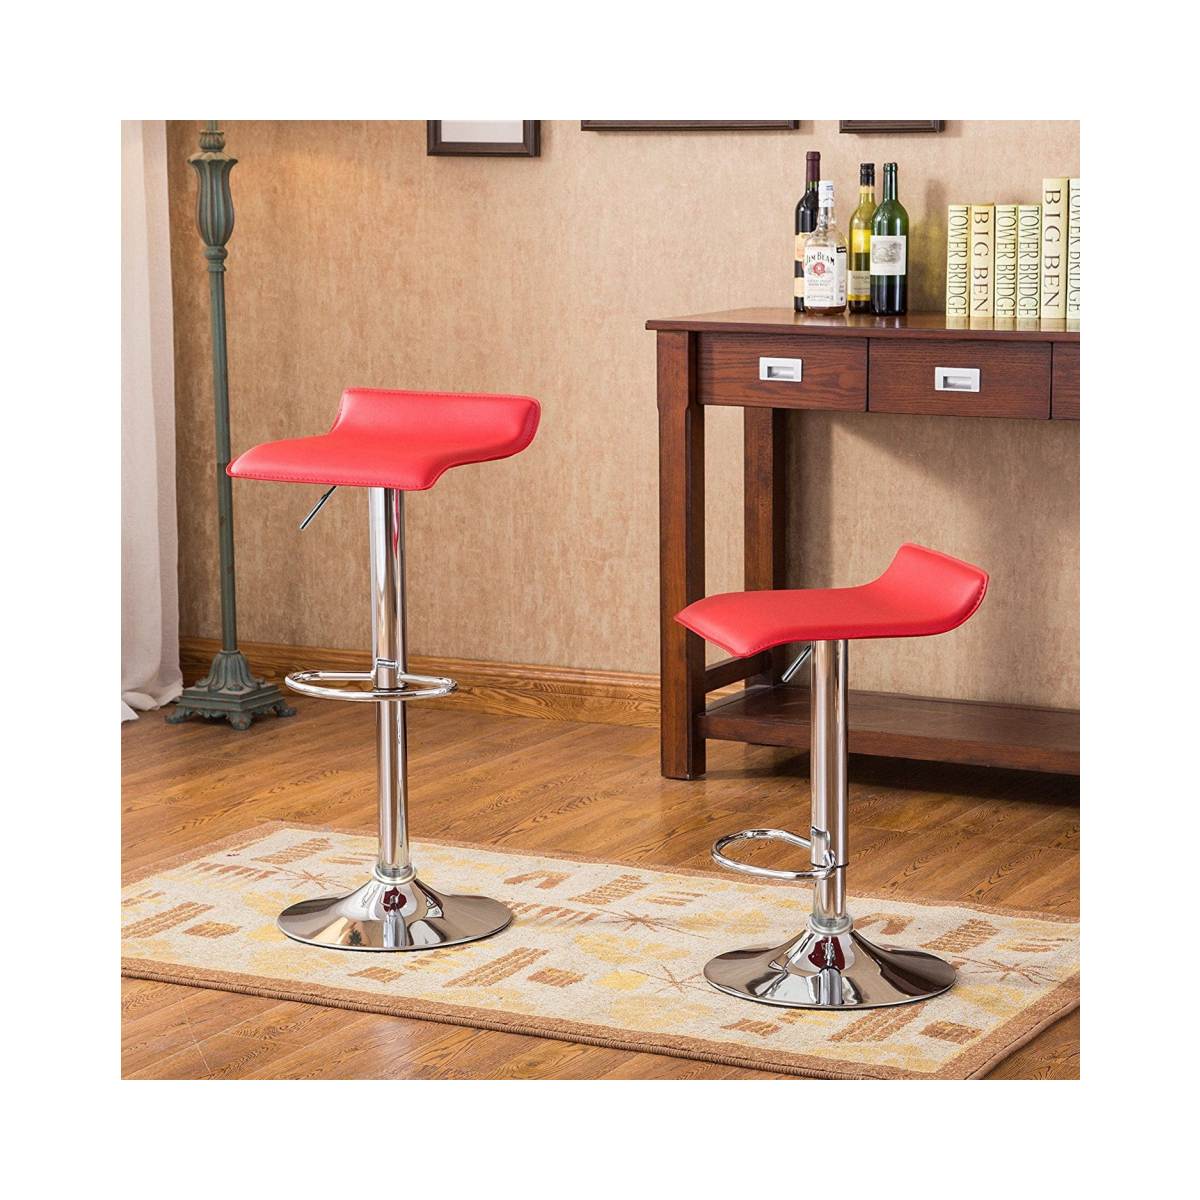 Elecwish red bar stool OW002 display scene